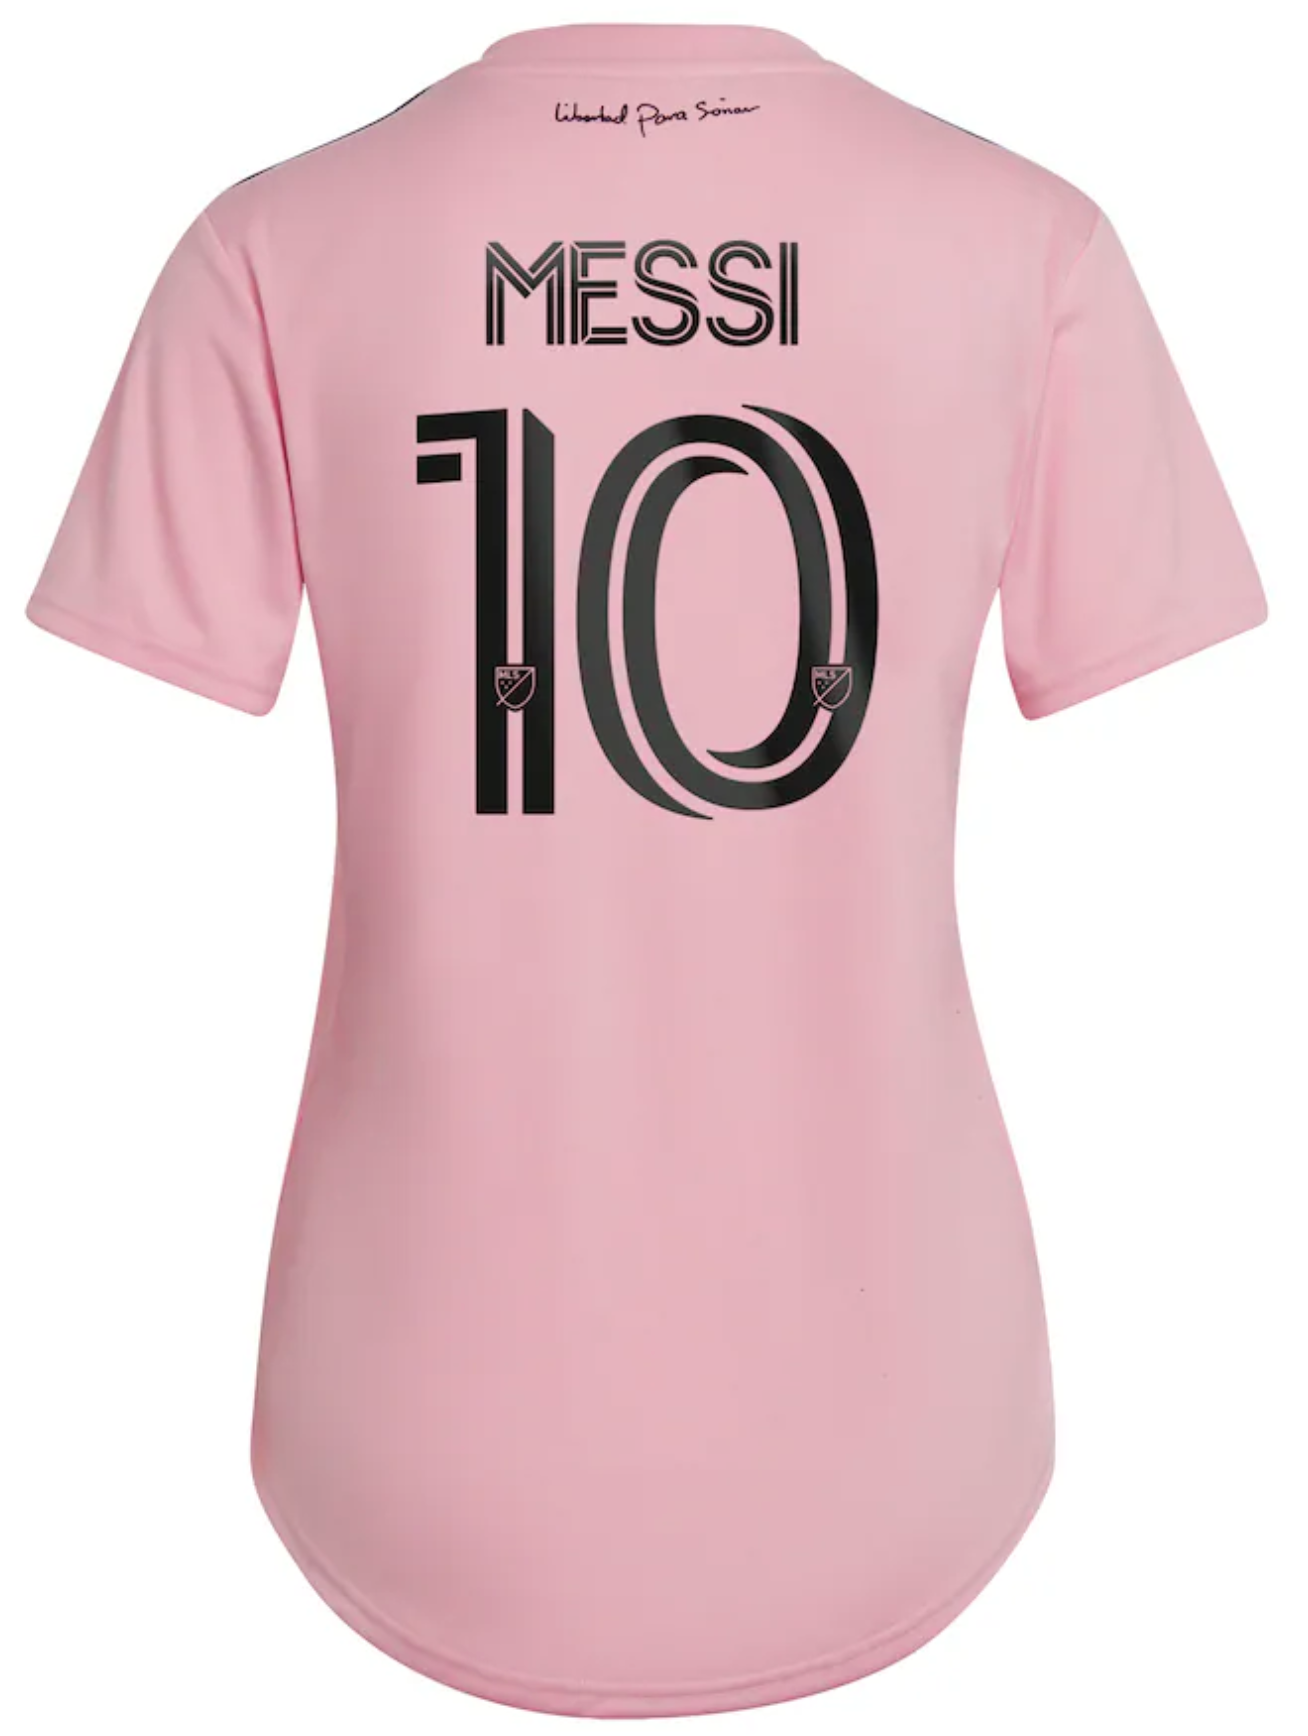 Inter Miami CF adidas MESSI #10 Women's Home Jersey - Pink